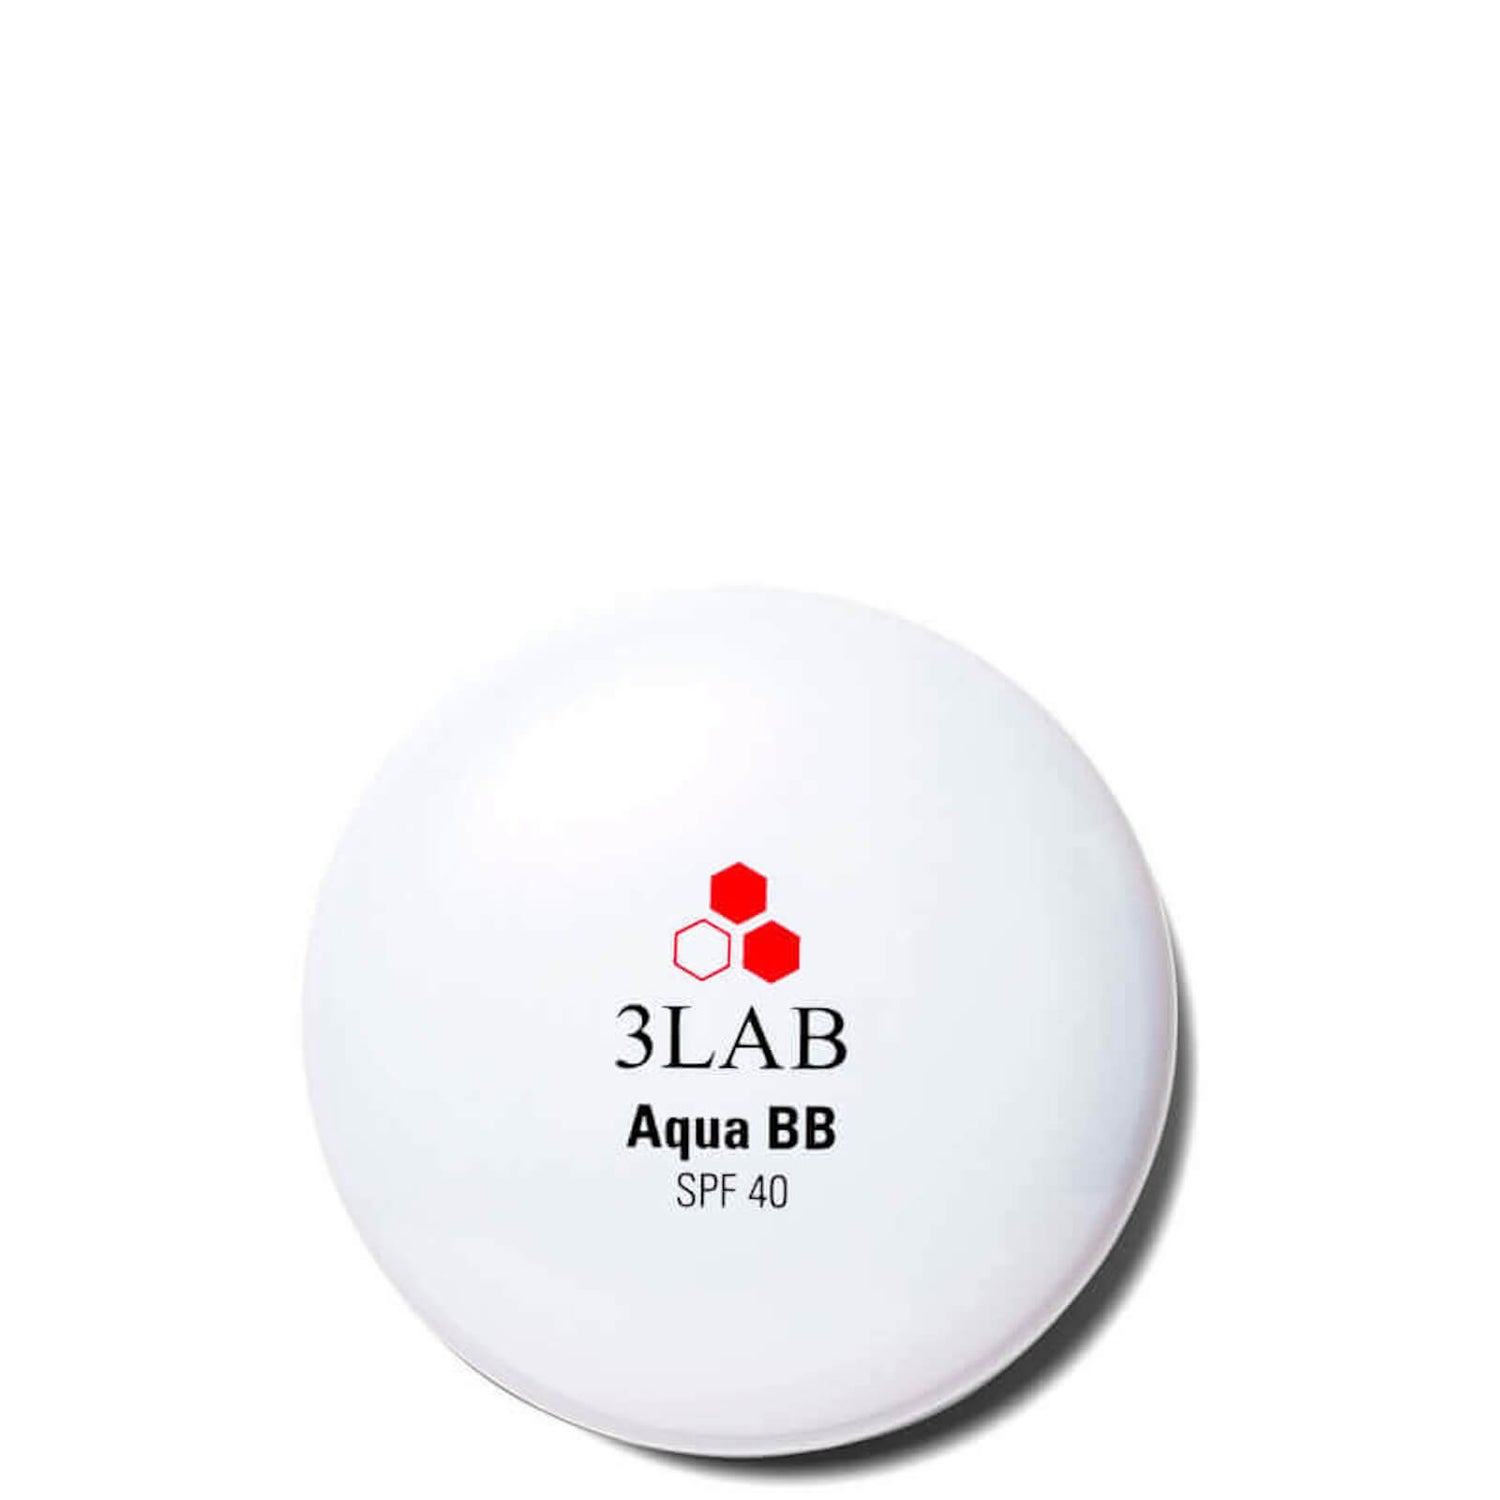 3LAB Aqua BB SPF 40 (1 oz.)